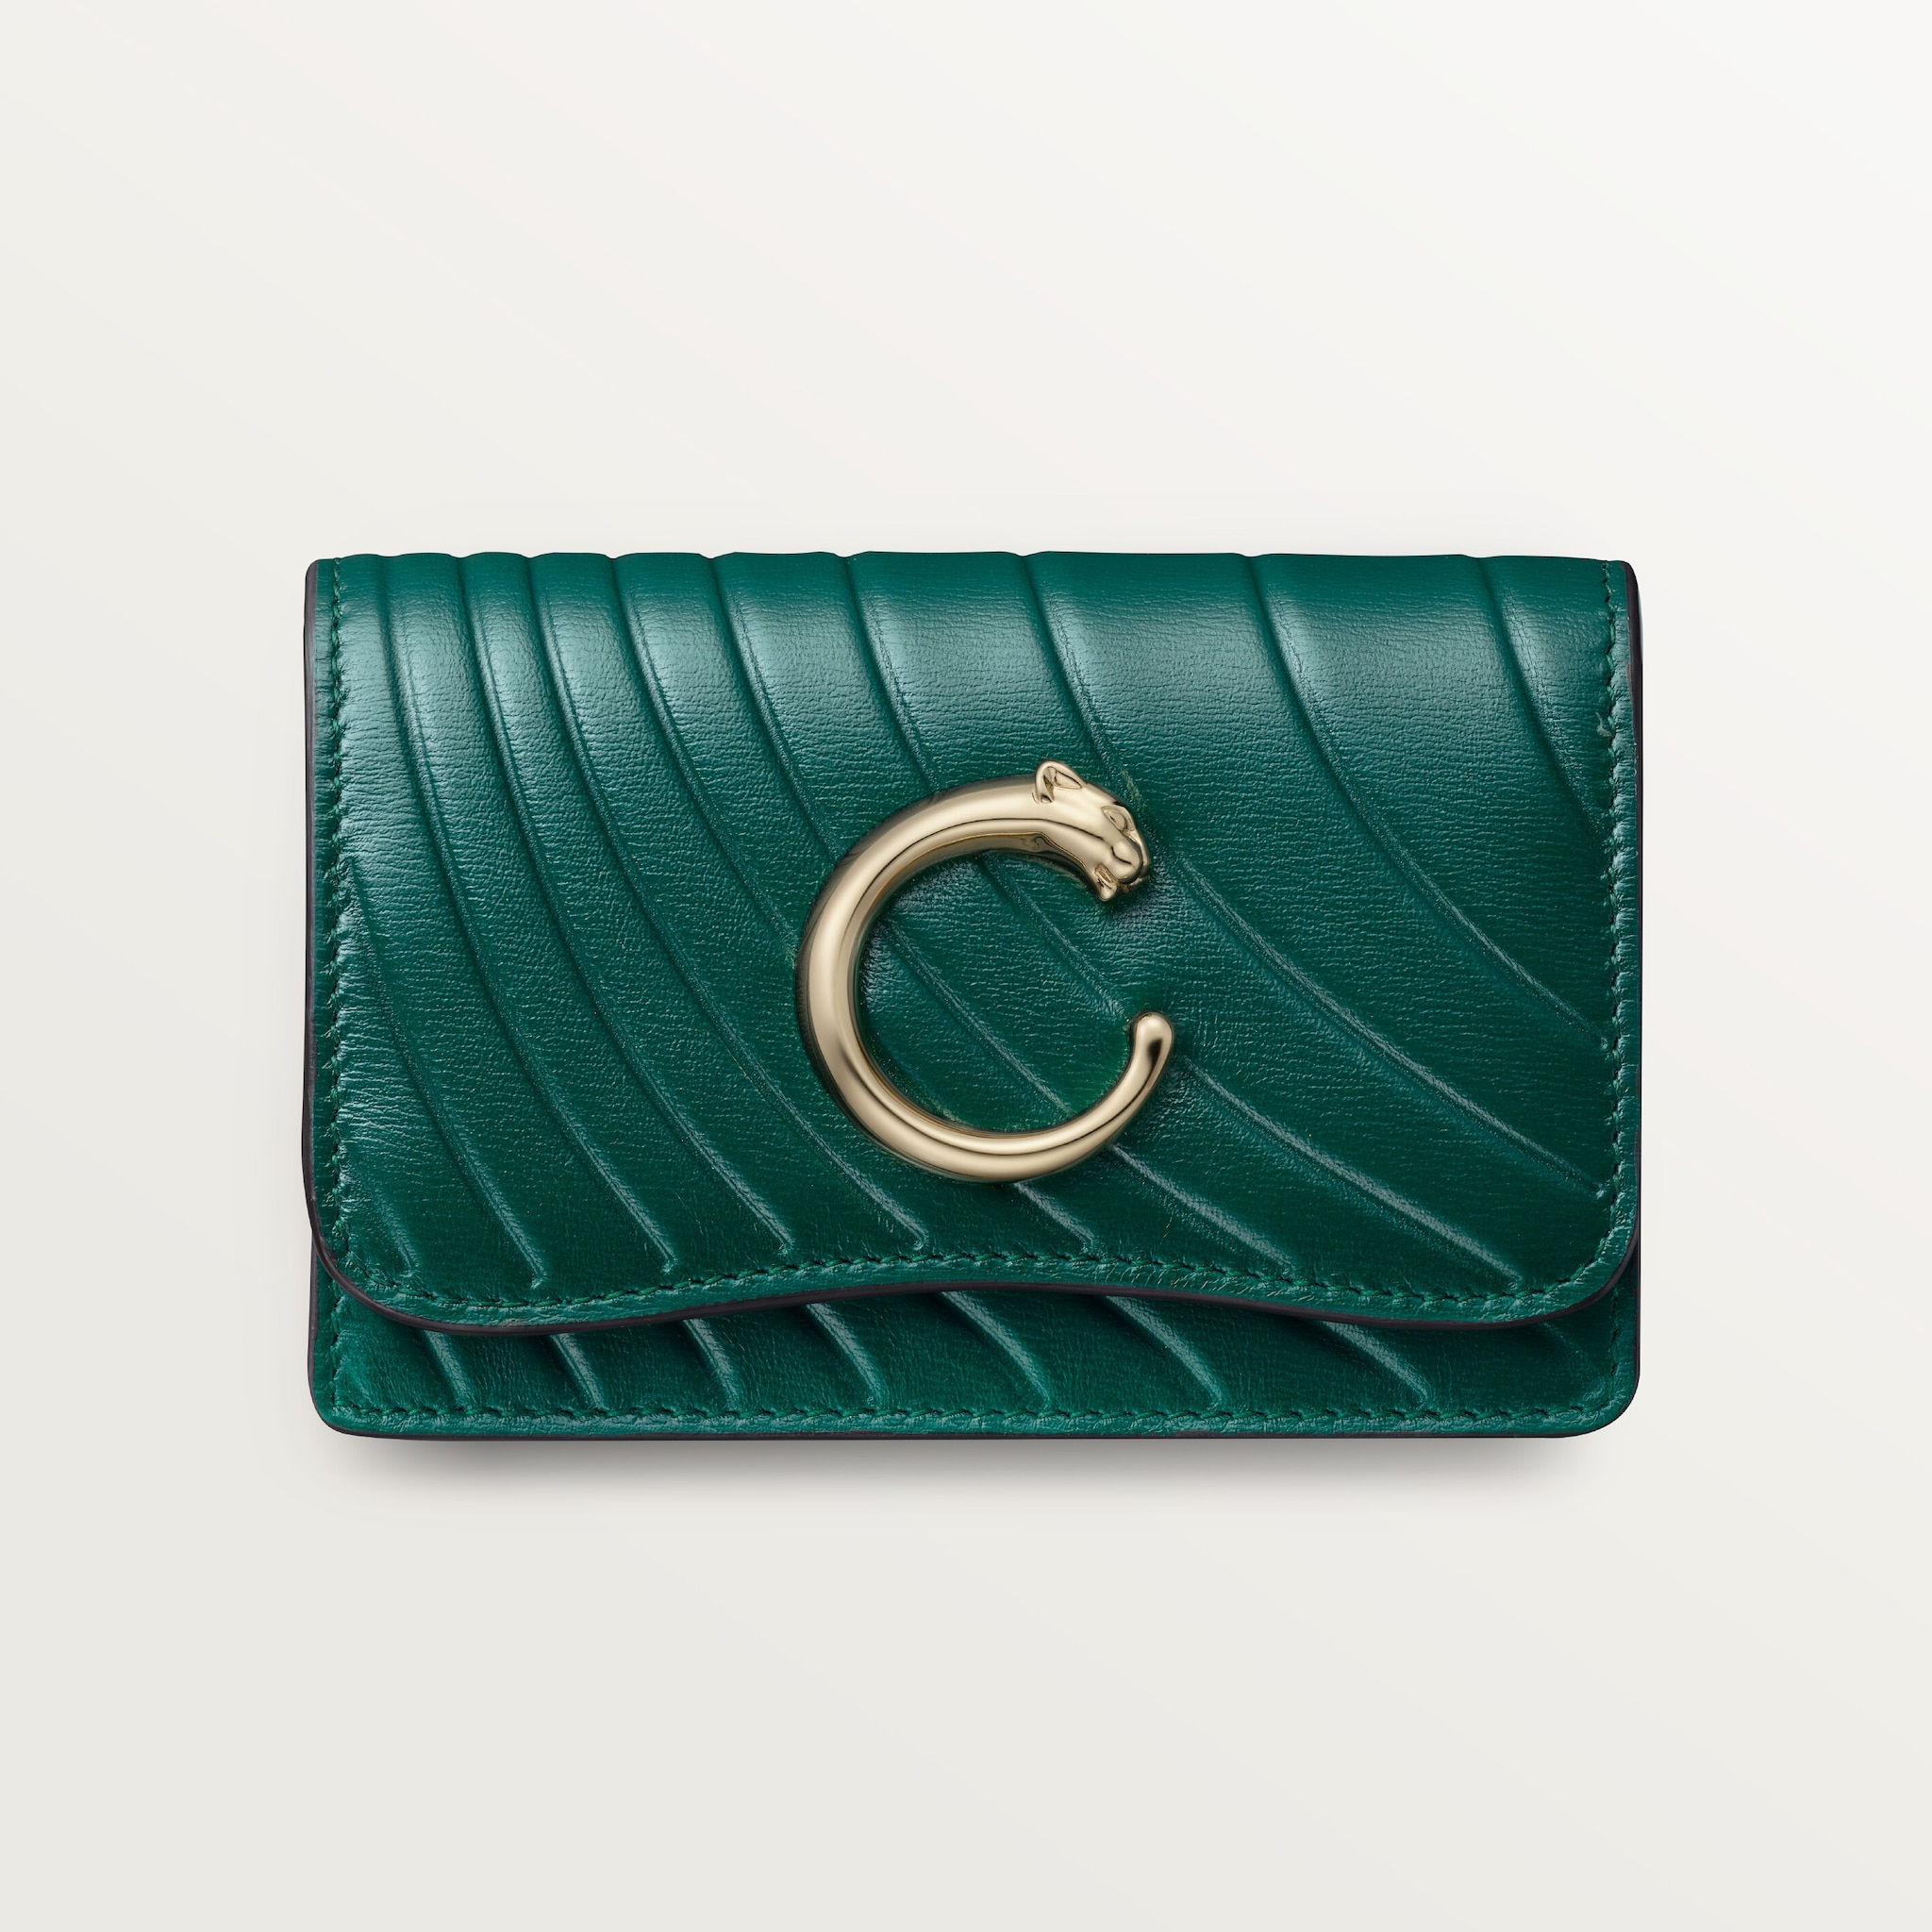 Business card holder with zip, Panthère de CartierEmerald green calfskin with embossed Cartier signature motif, golden finish